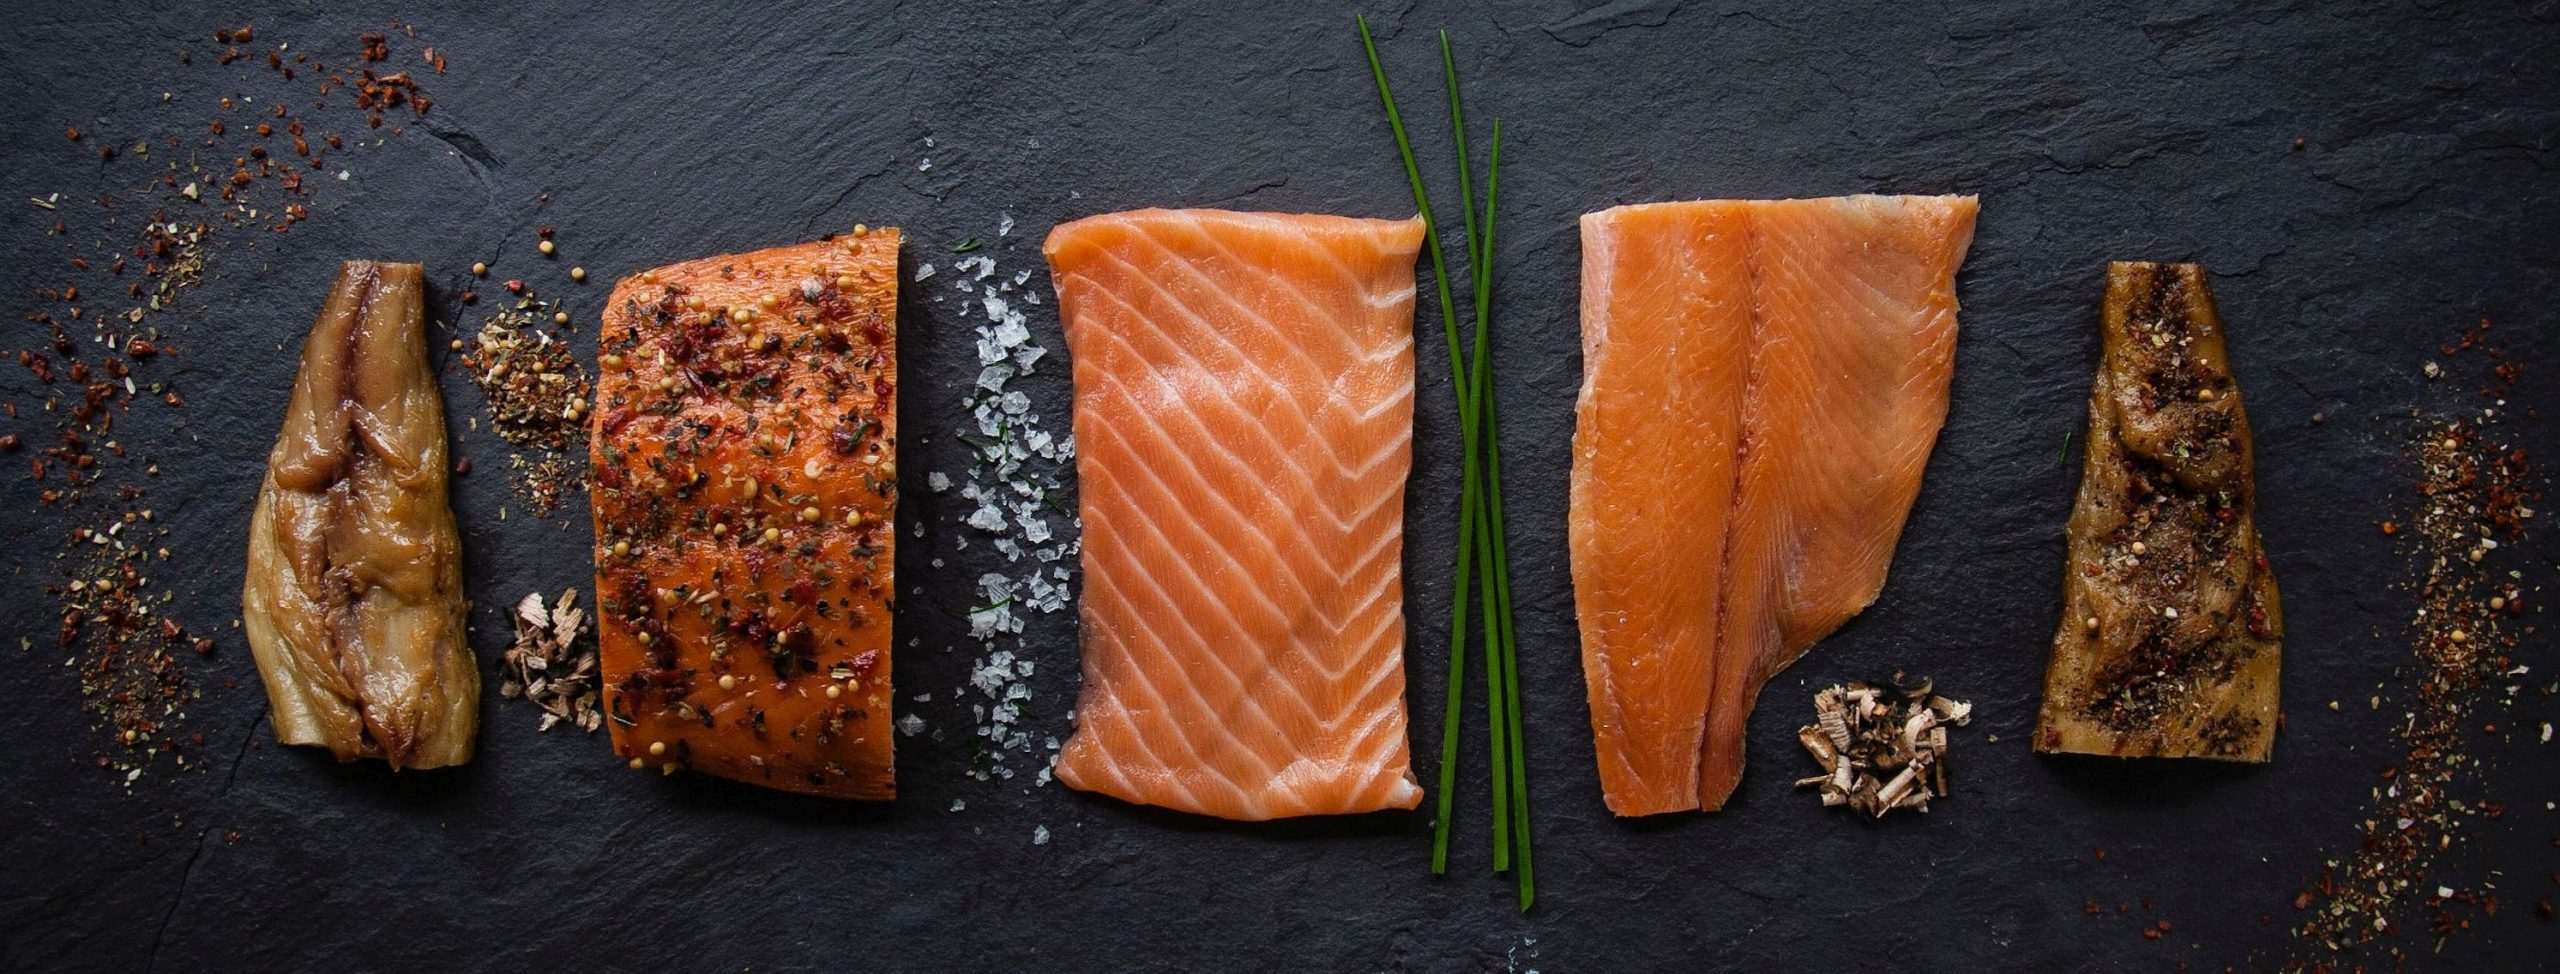 Burren Smokehouse salmon gift hampers subscriptions